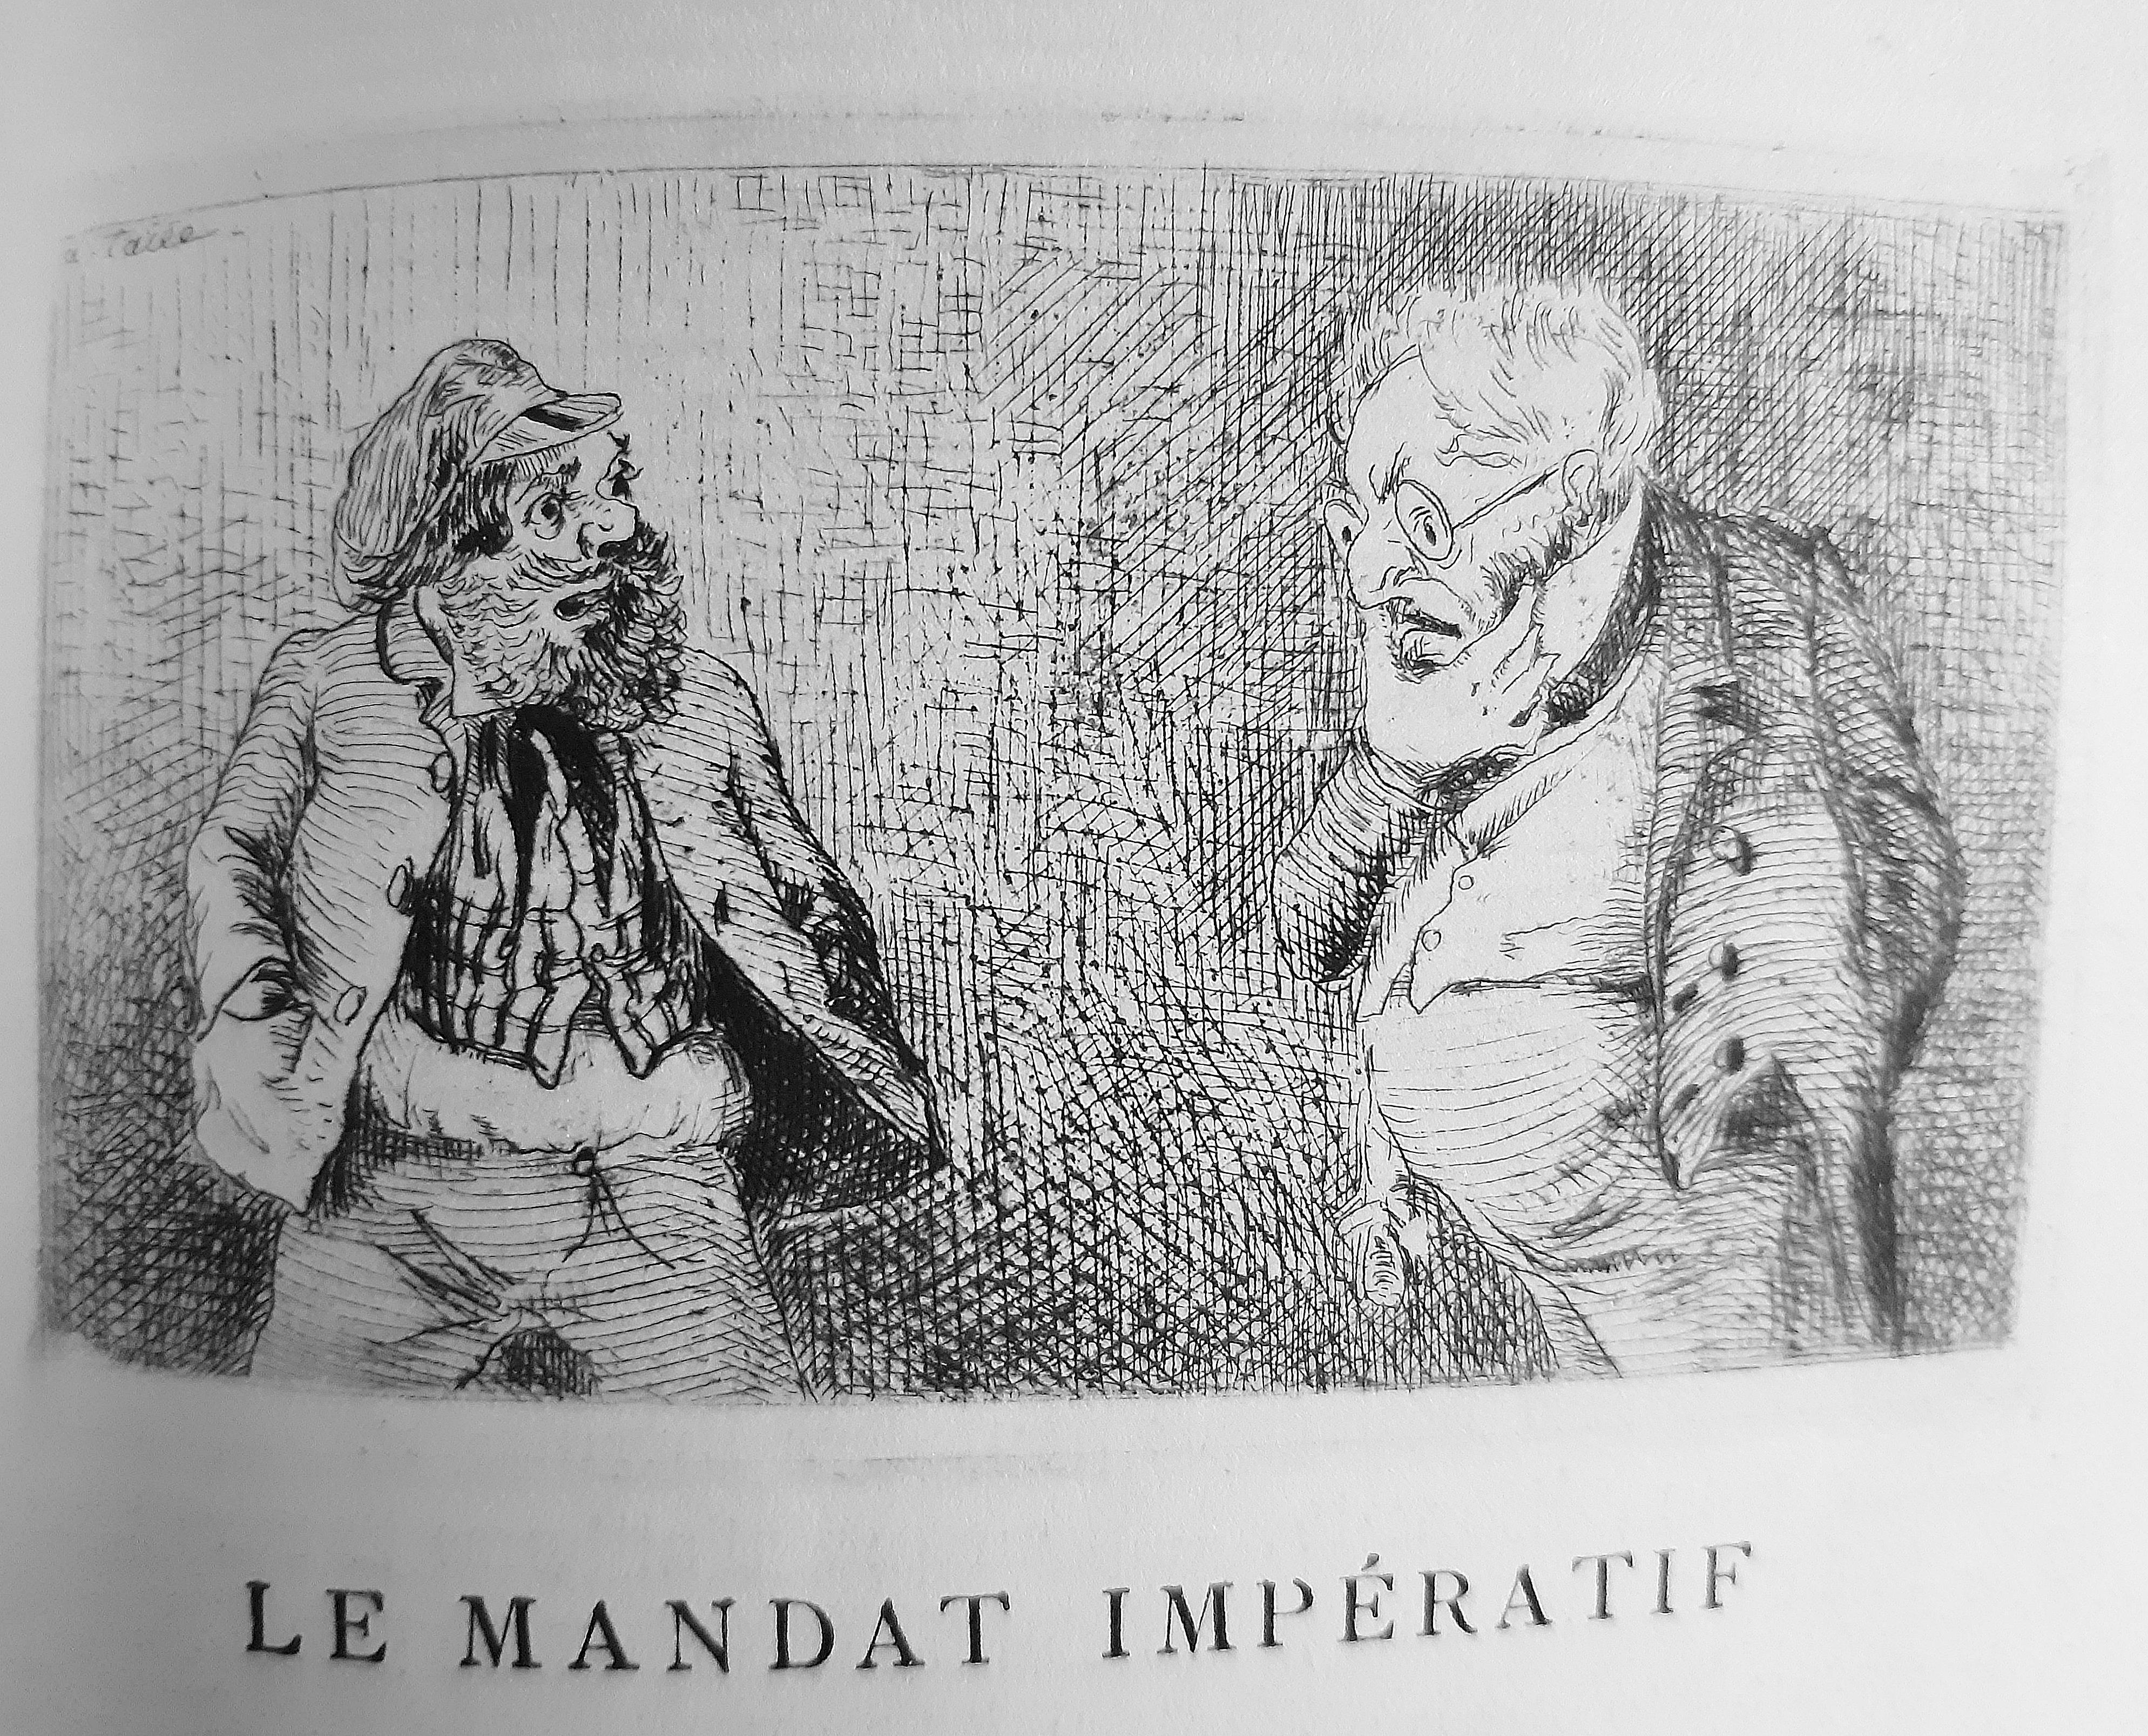 Thtre des Pupazzi – seltenes Buch, illustriert von L. Lemercier de Neuville – 1876